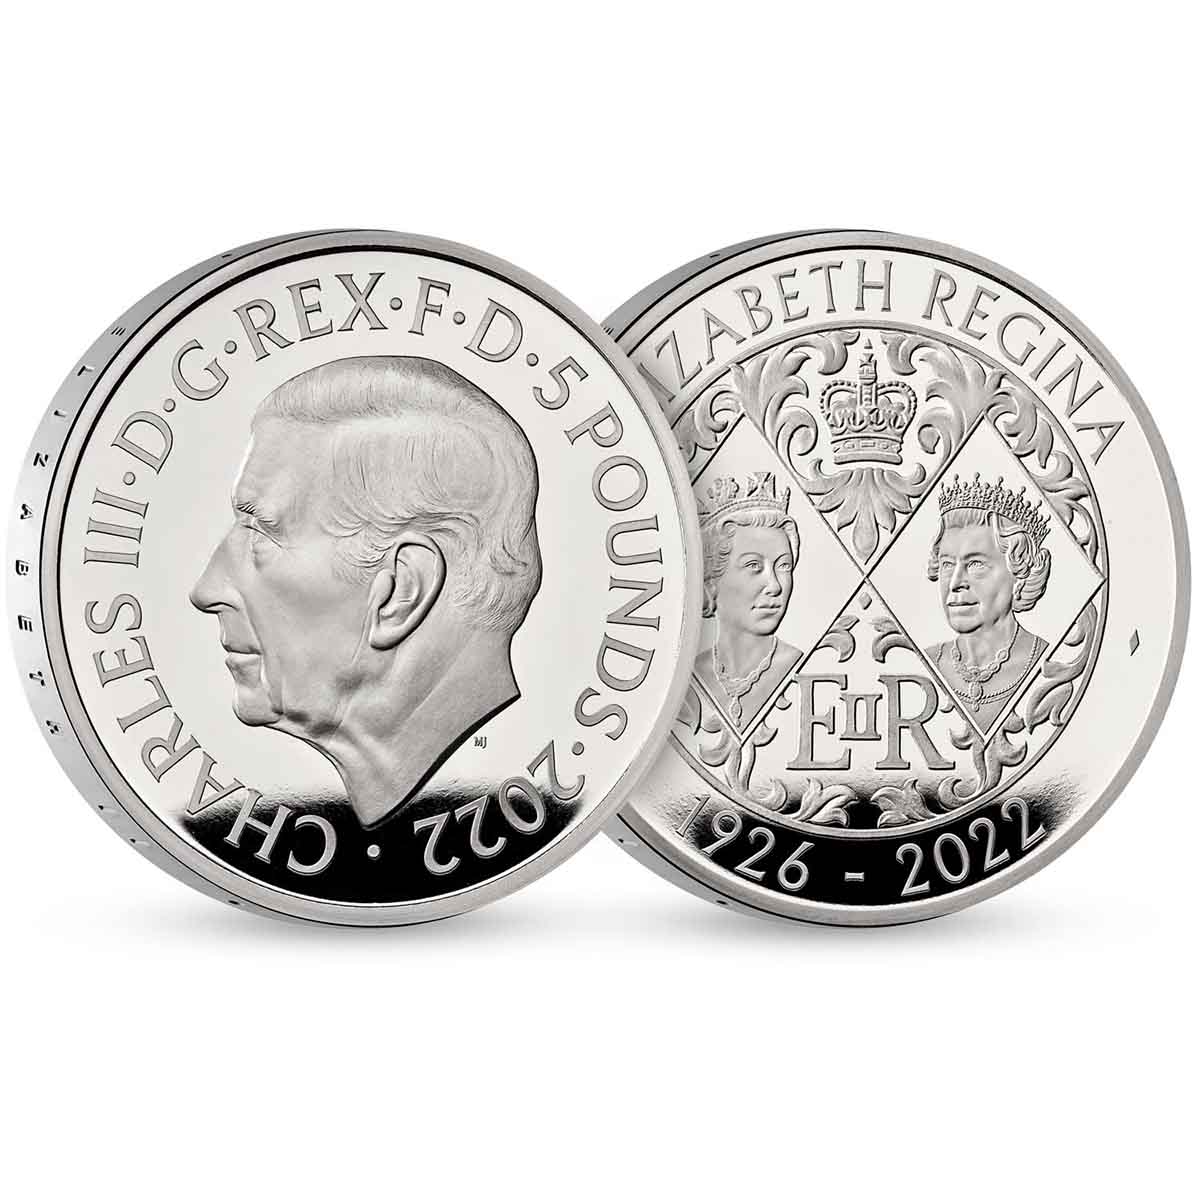 King Charles III 2022 £5 Queen Elizabeth II Tribute Silver Proof Coin